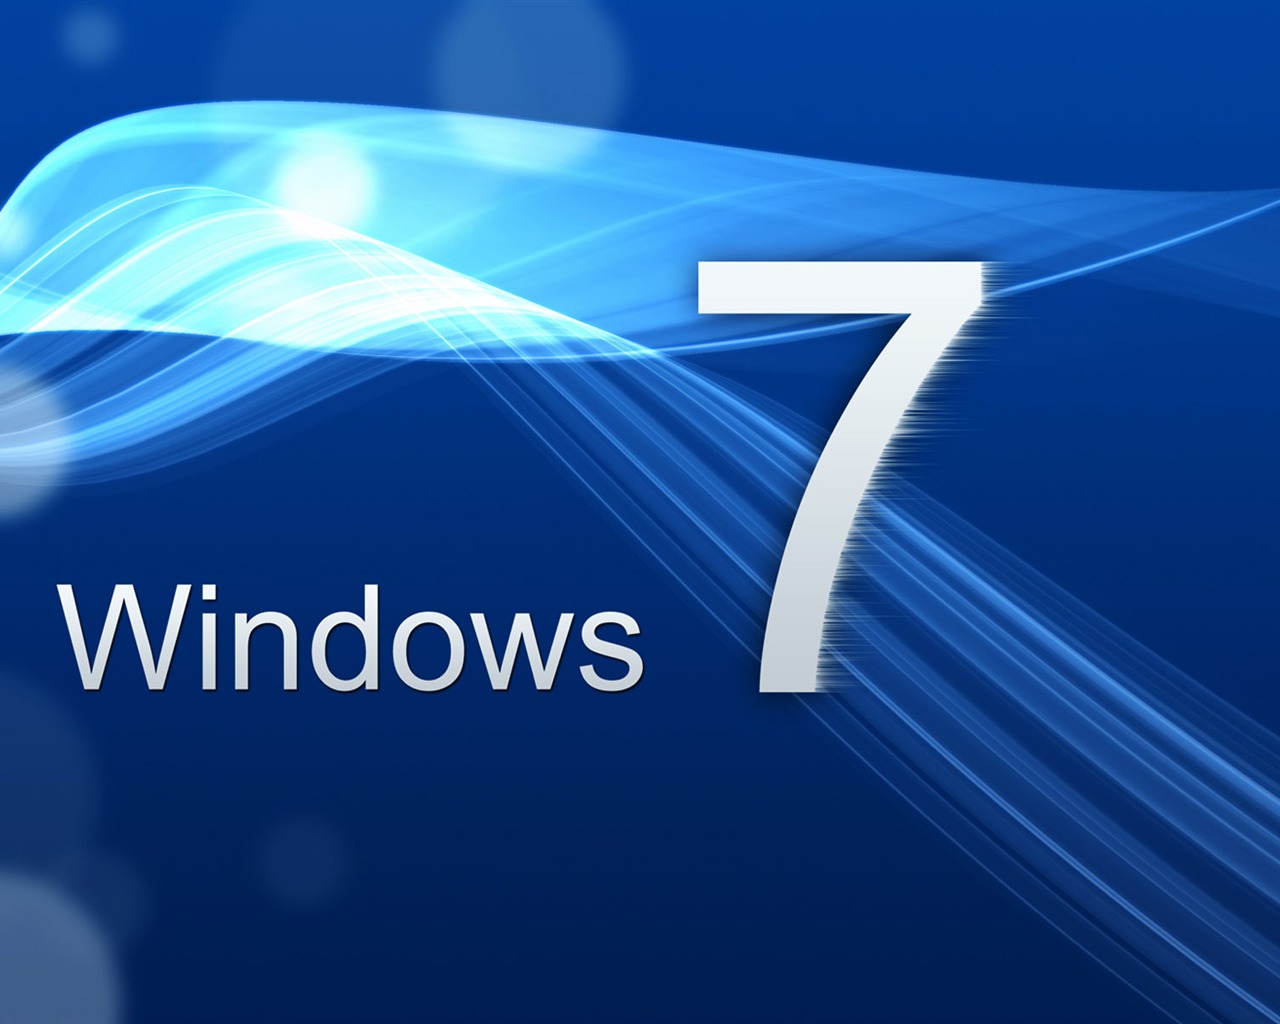 Windows7 專題壁紙 #1 - 1280x1024